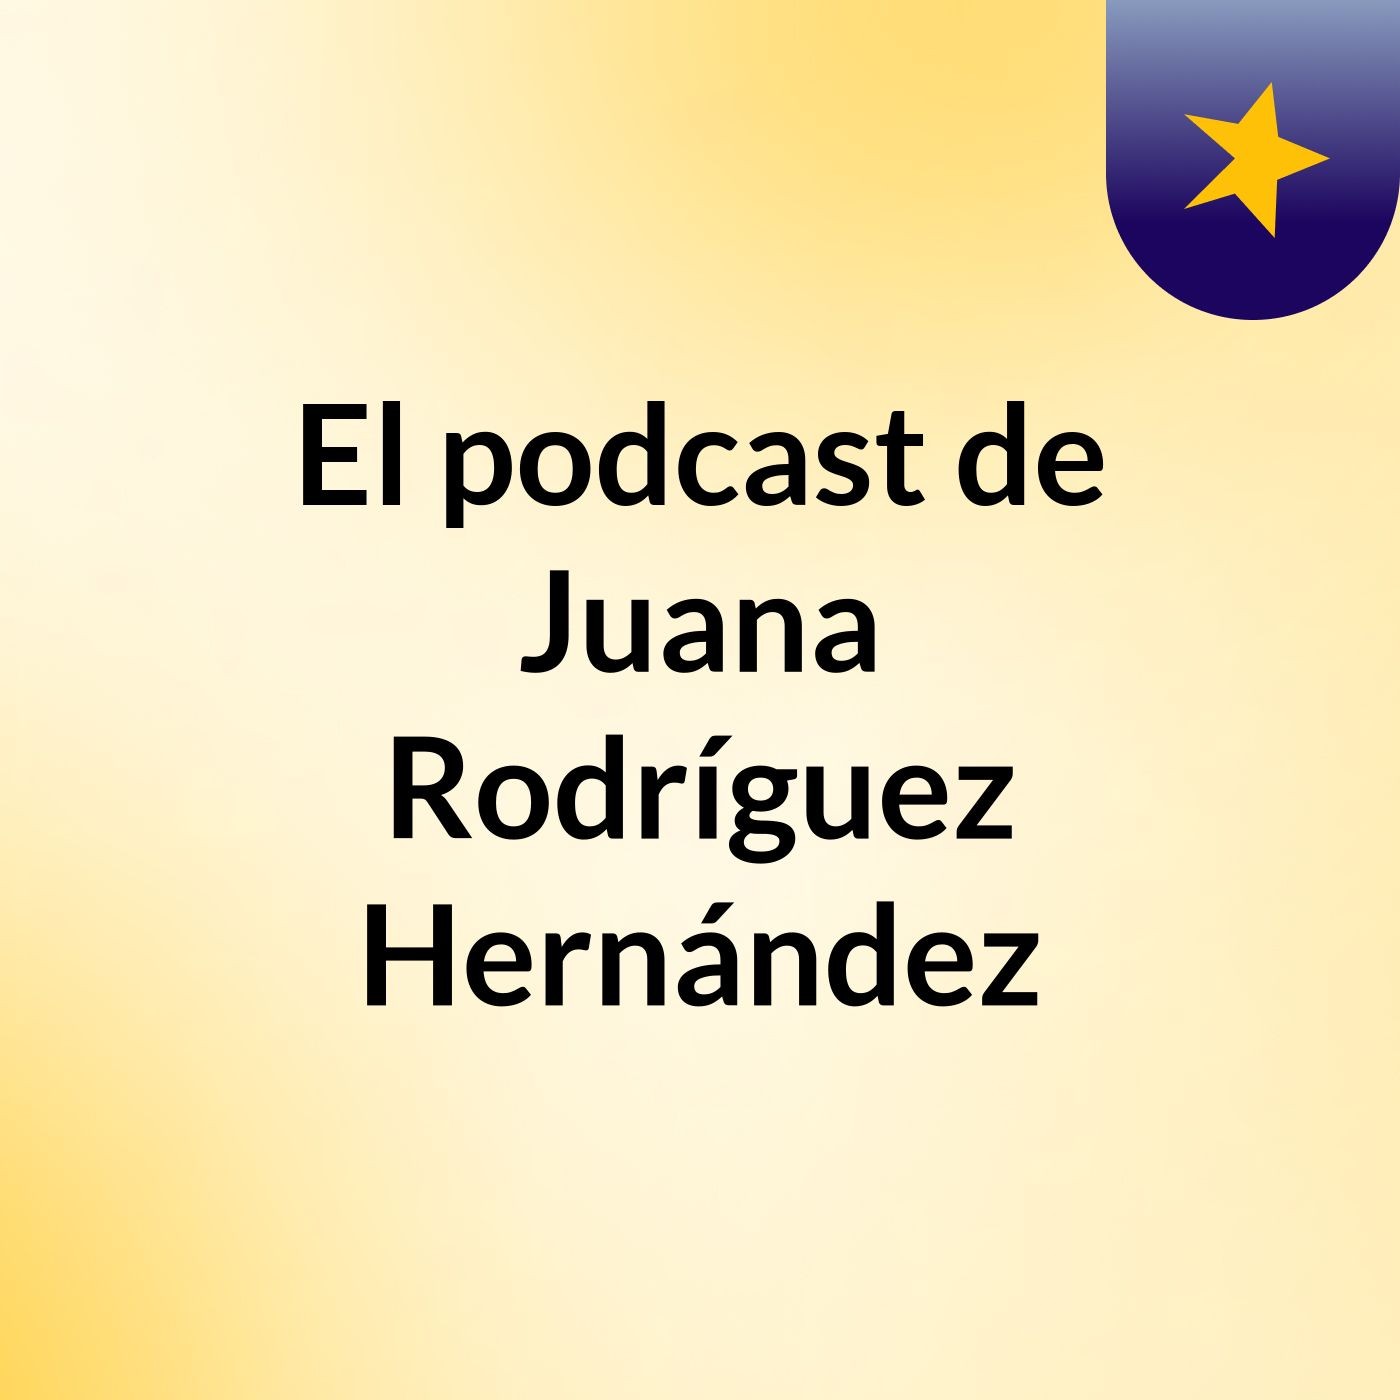 El podcast de Juana Rodríguez Hernández